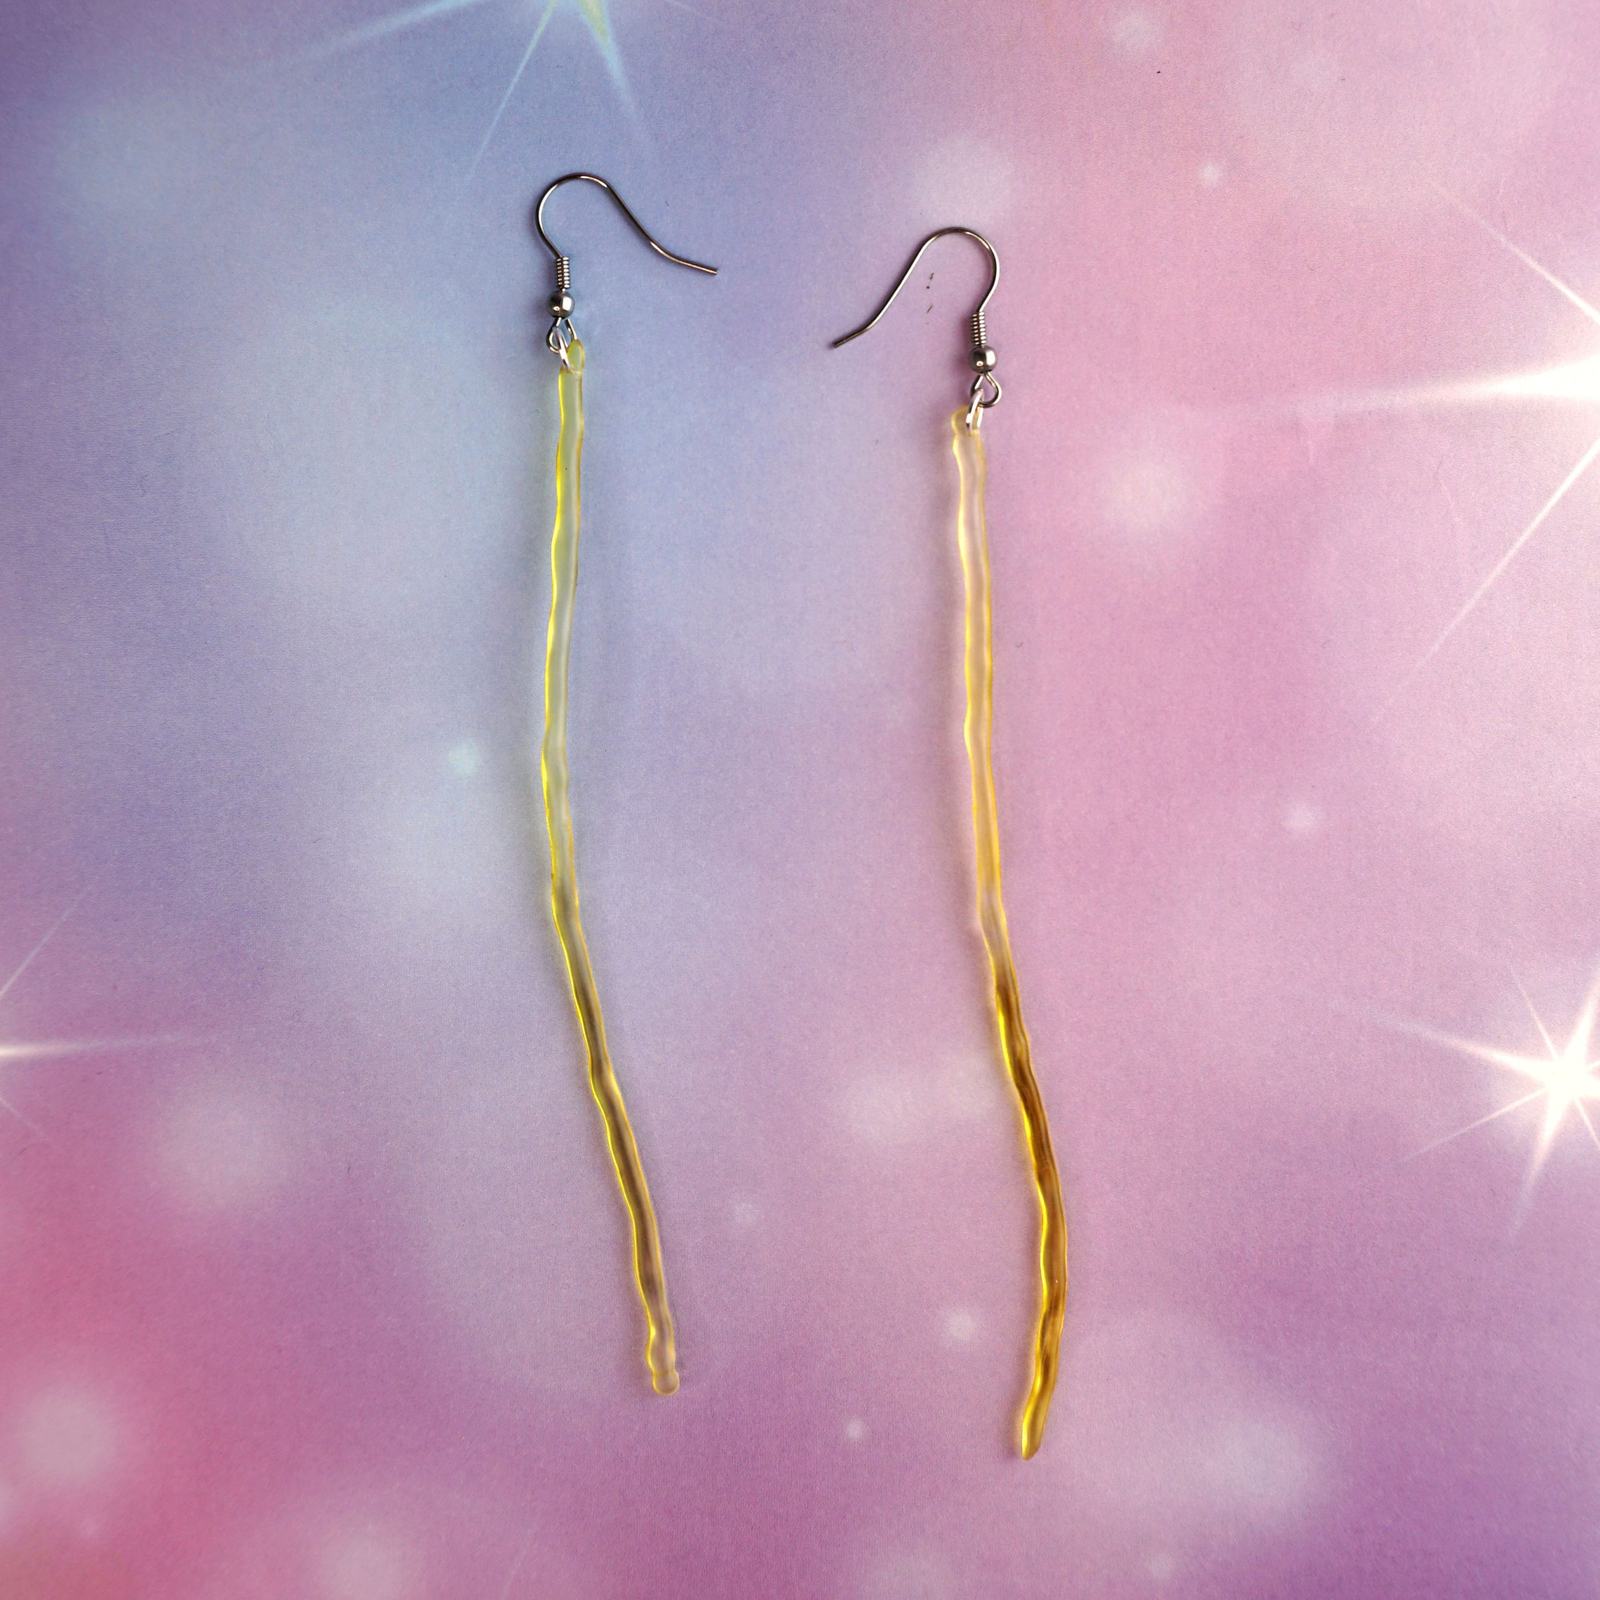 Goldfish fish bag earrings - Candy Goblins